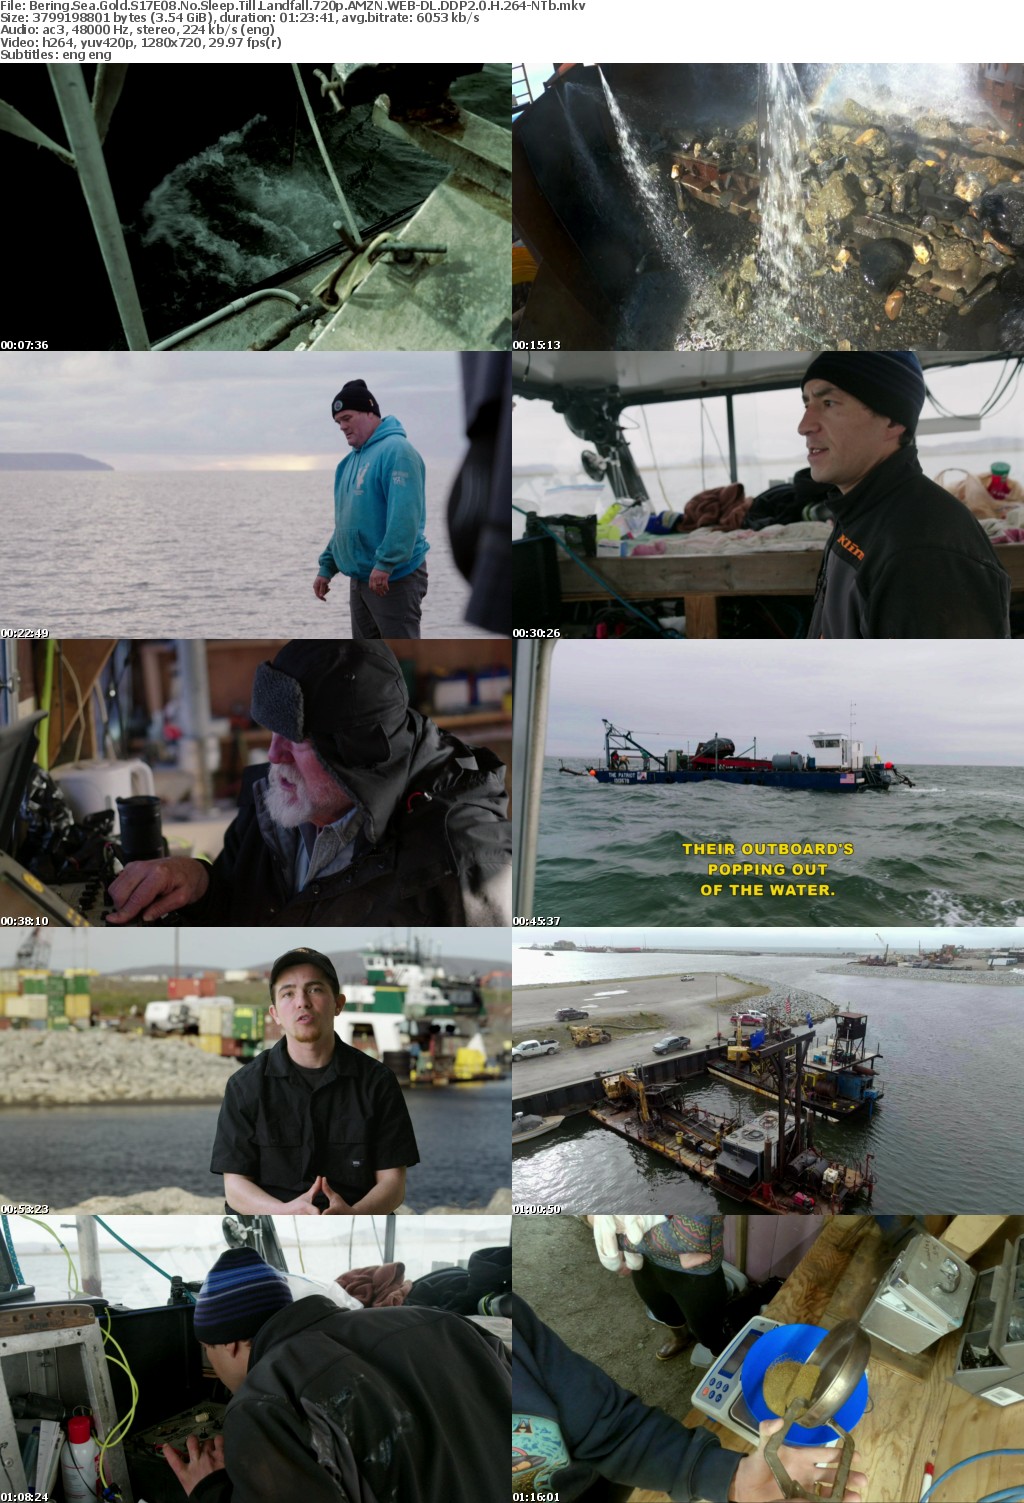 Bering Sea Gold S17E08 No Sleep Till Landfall 720p AMZN WEB-DL DDP2 0 H 264-NTb